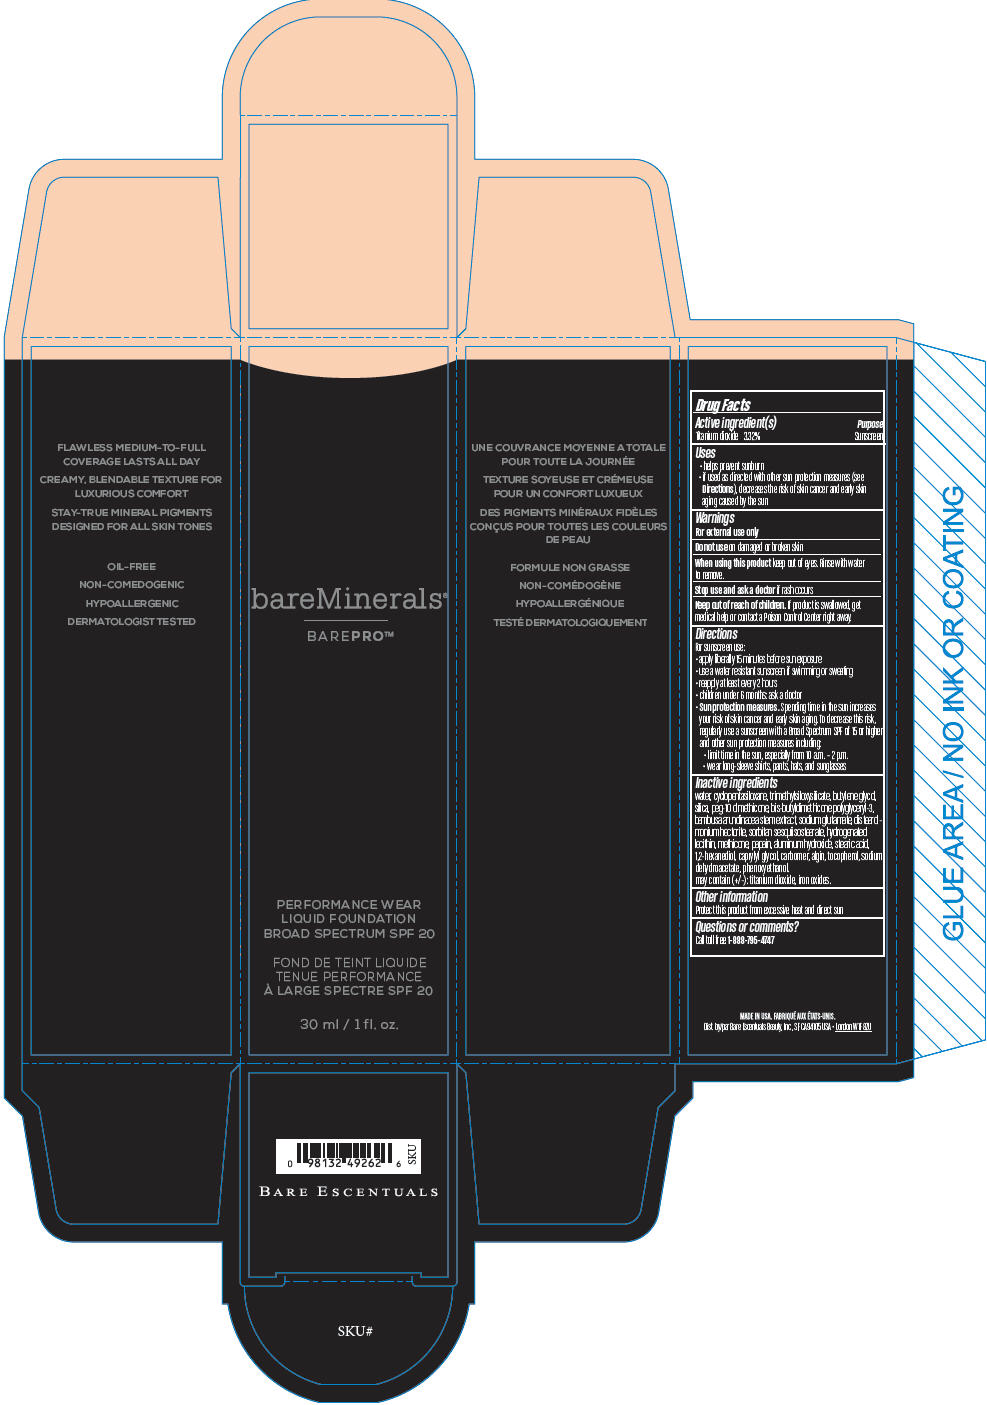 PRINCIPAL DISPLAY PANEL - 30 ml Bottle Carton - Honeycomb 20